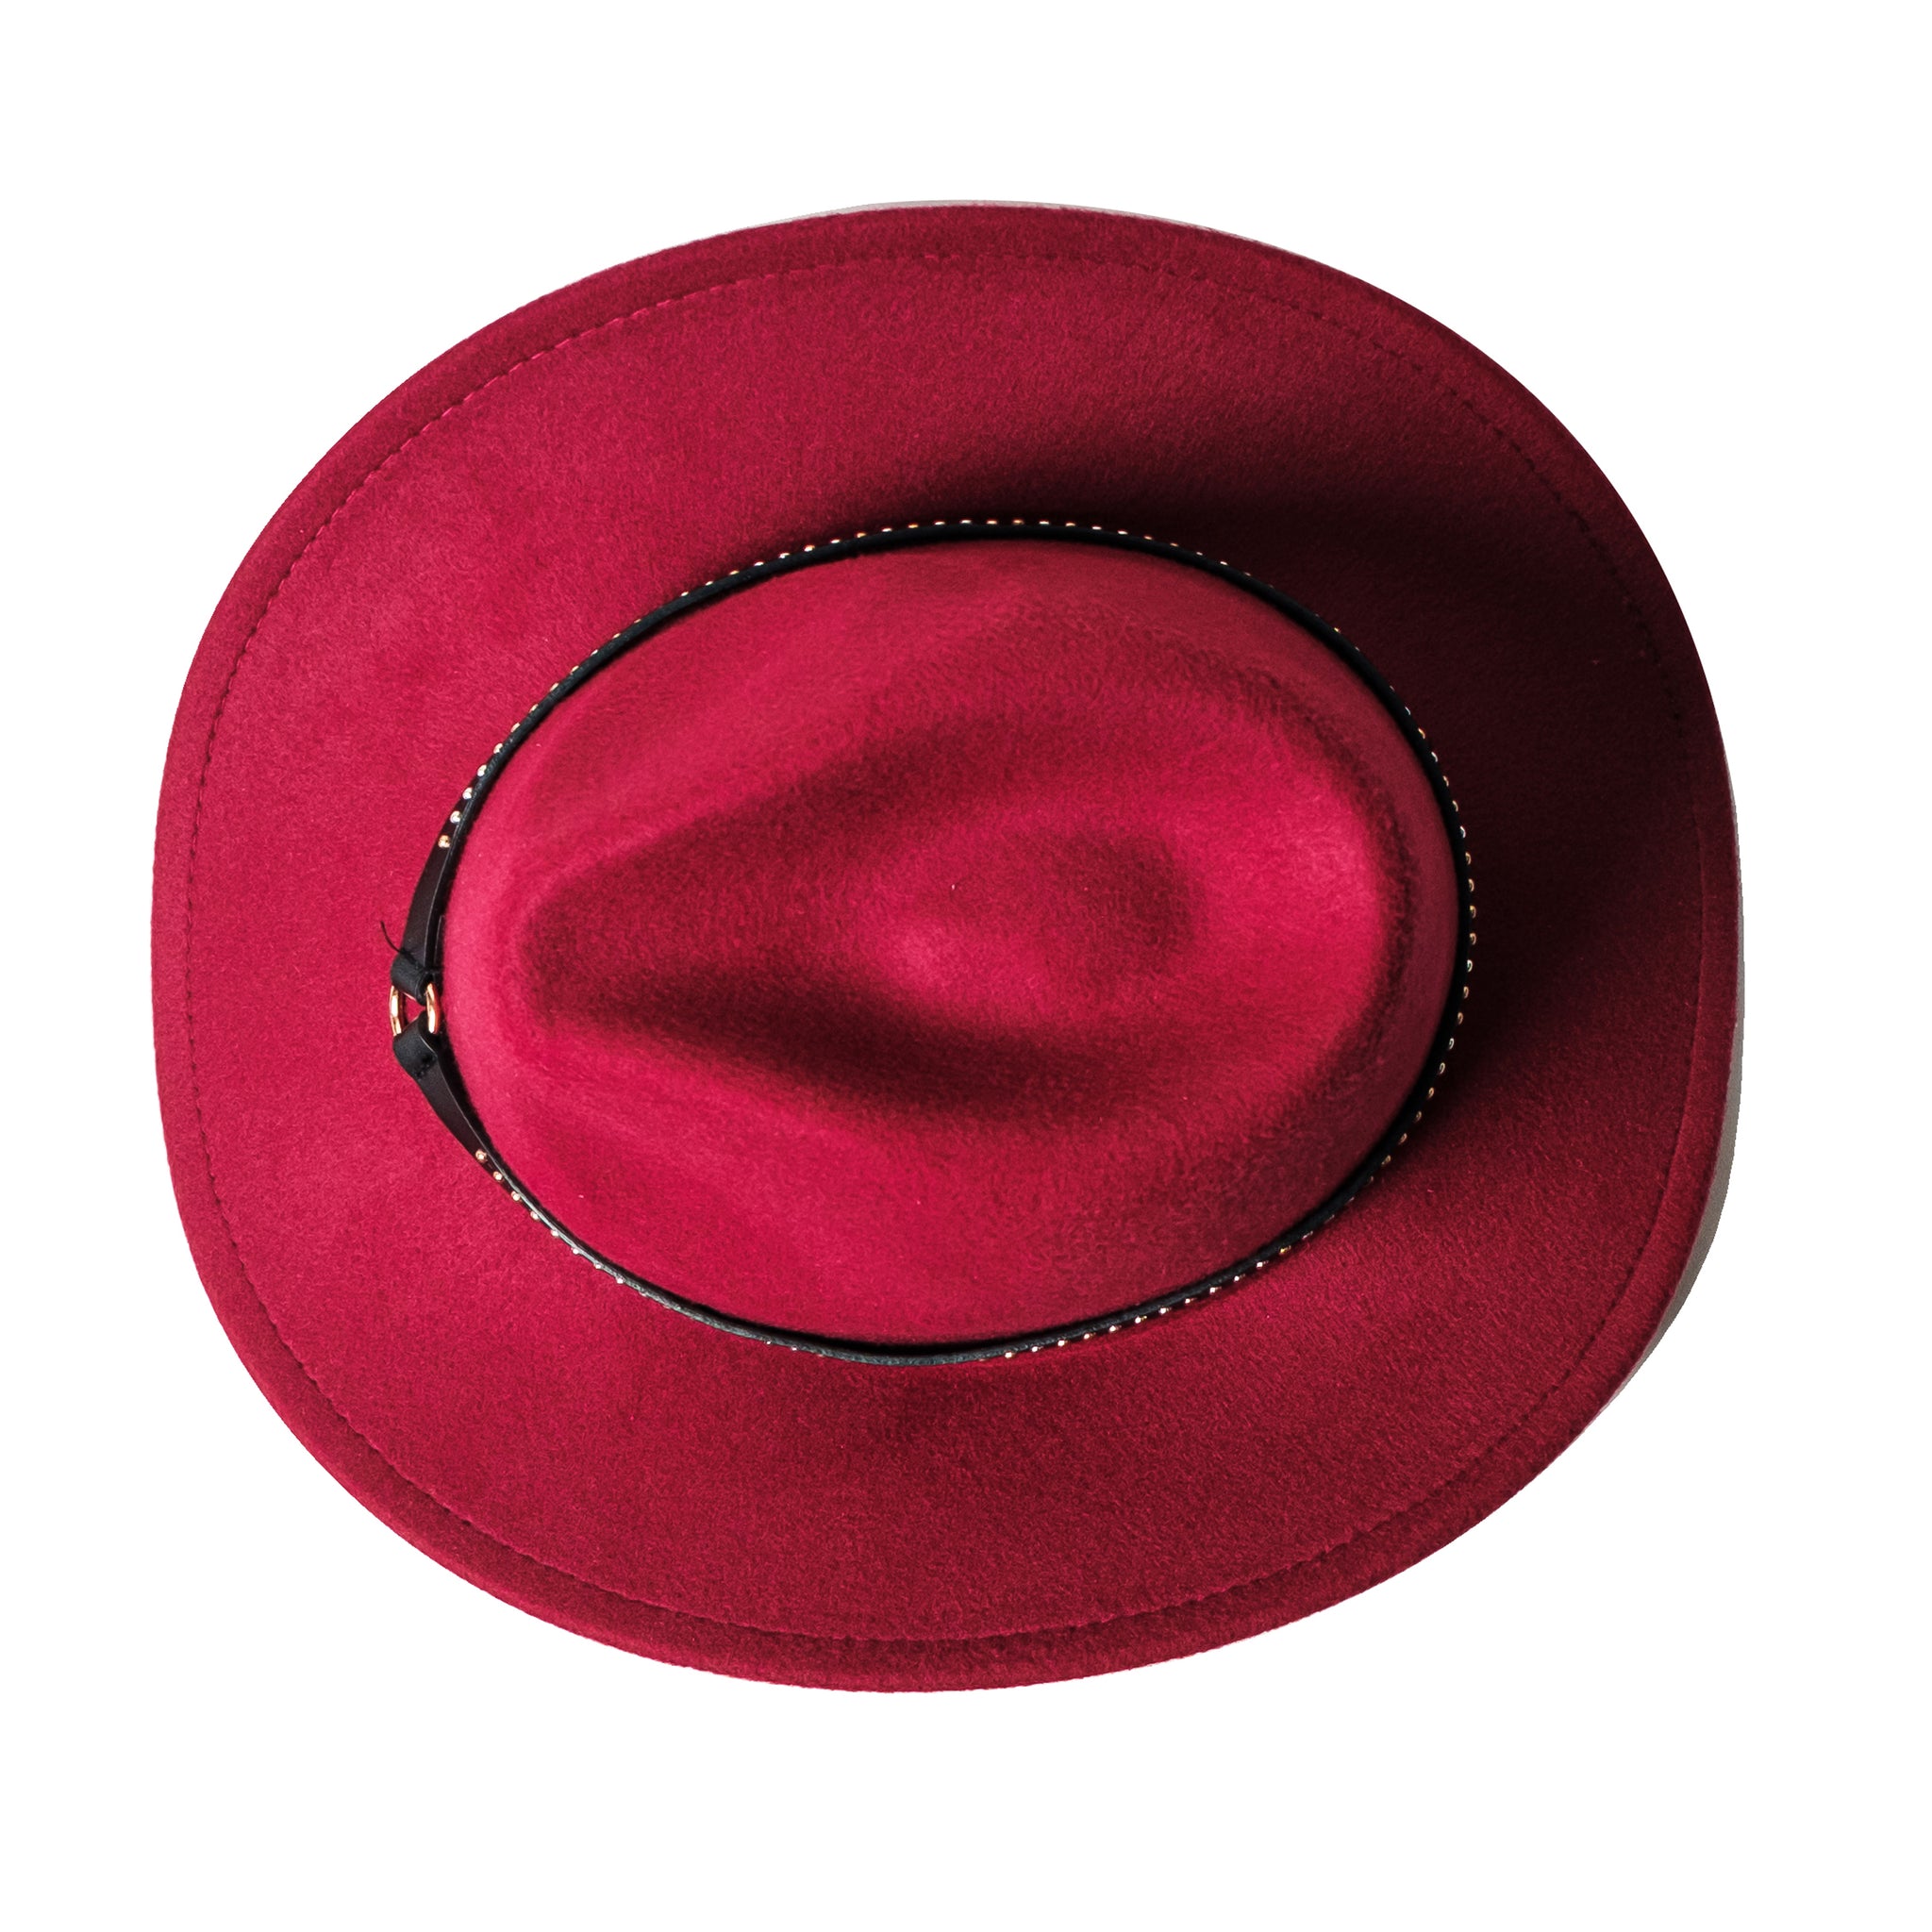 Chokore Cowboy Hat with Belt Band (Burgundy)